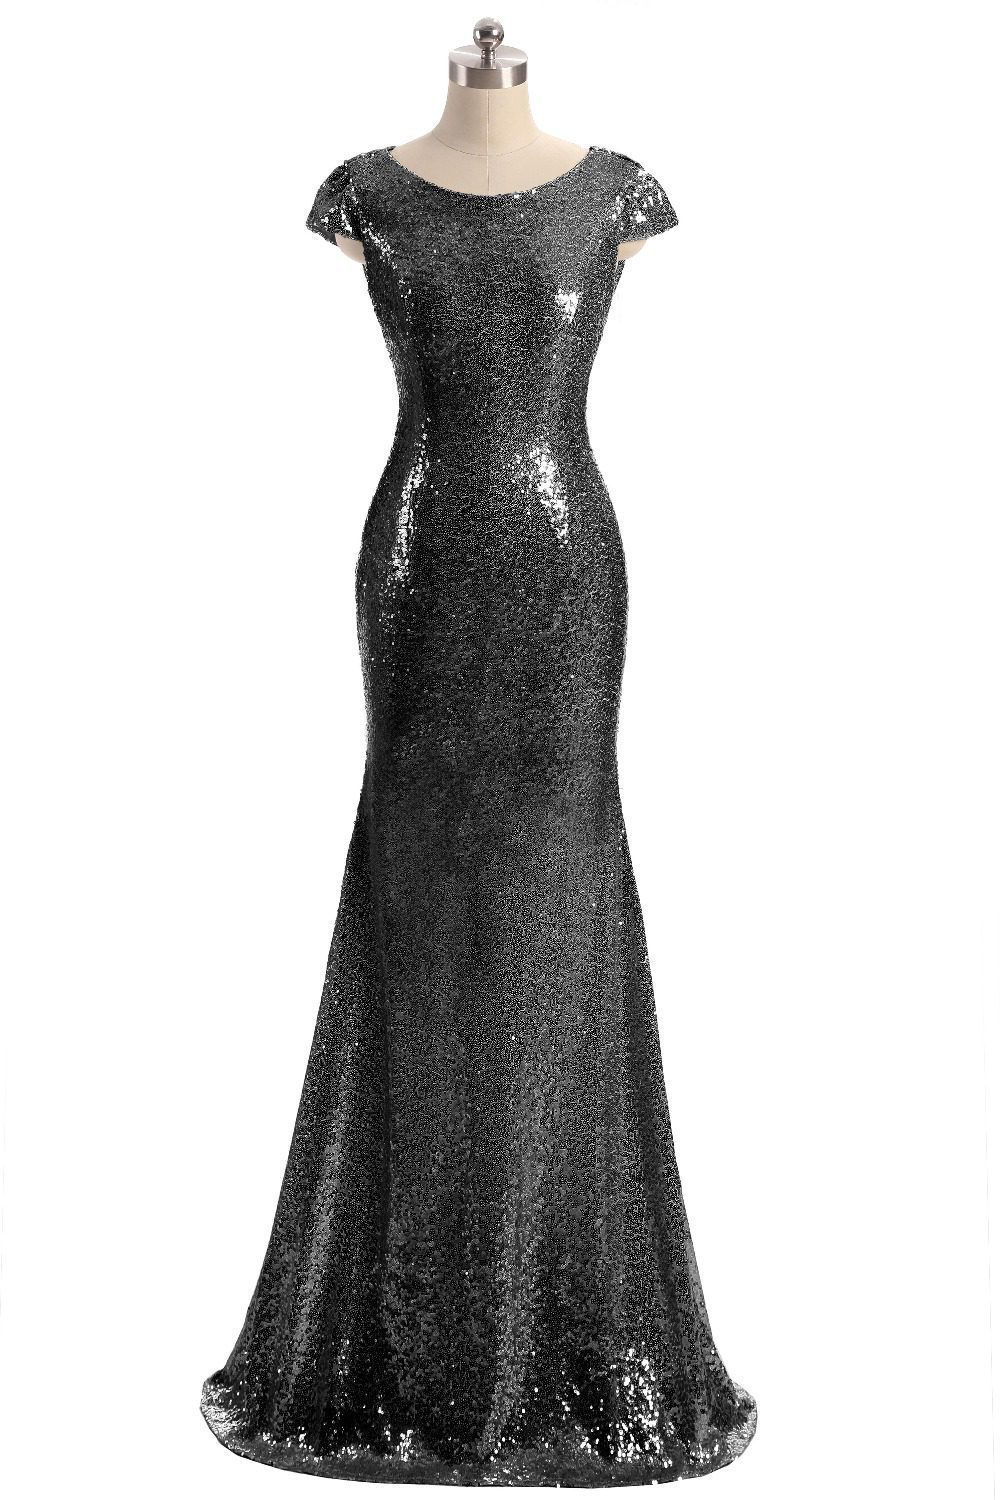 Sequined Short Sleeve Floor Length Bridesmaid Dress | Uniqistic.com